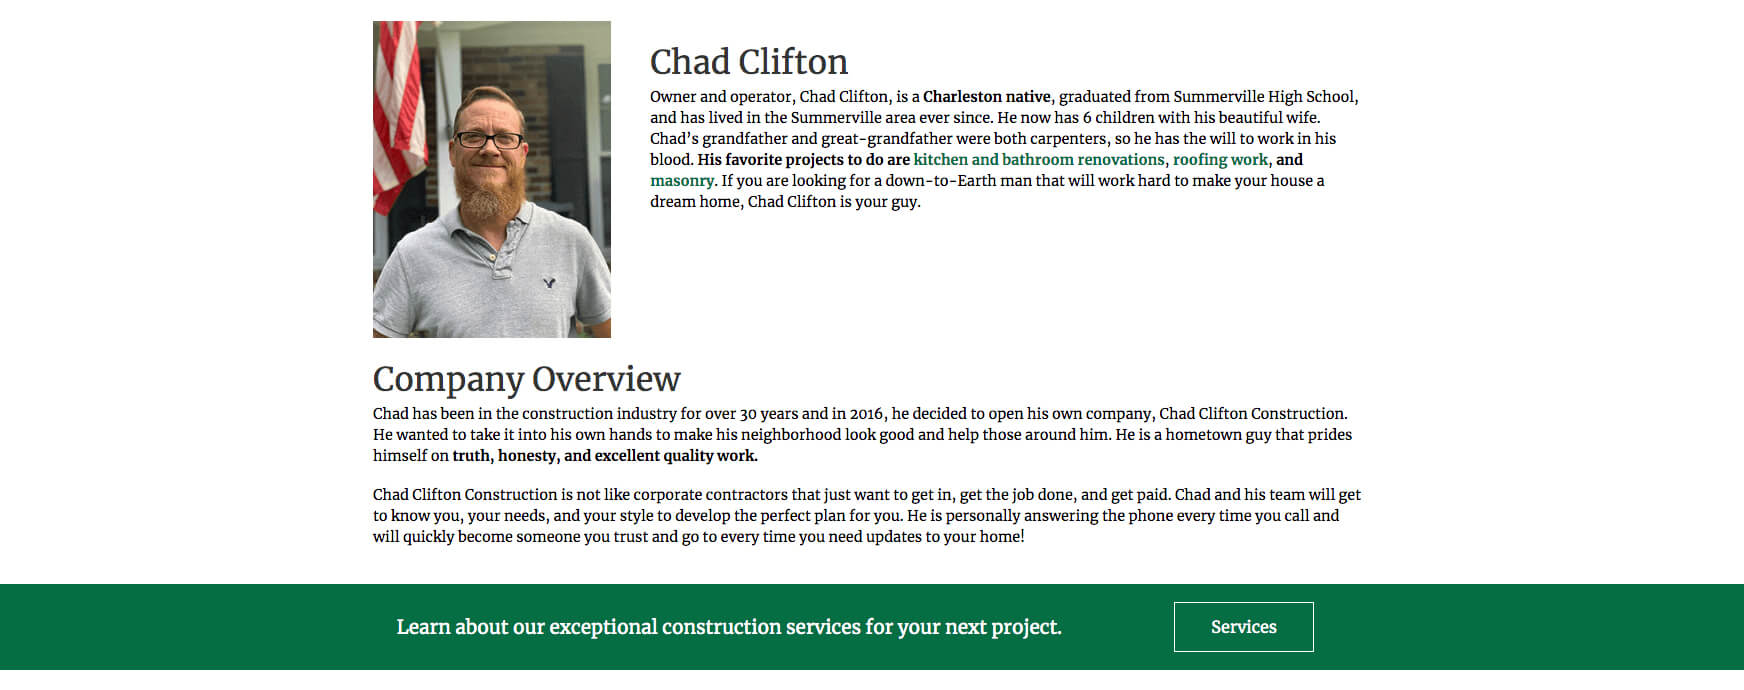 chad clifton construction branding website design for construction